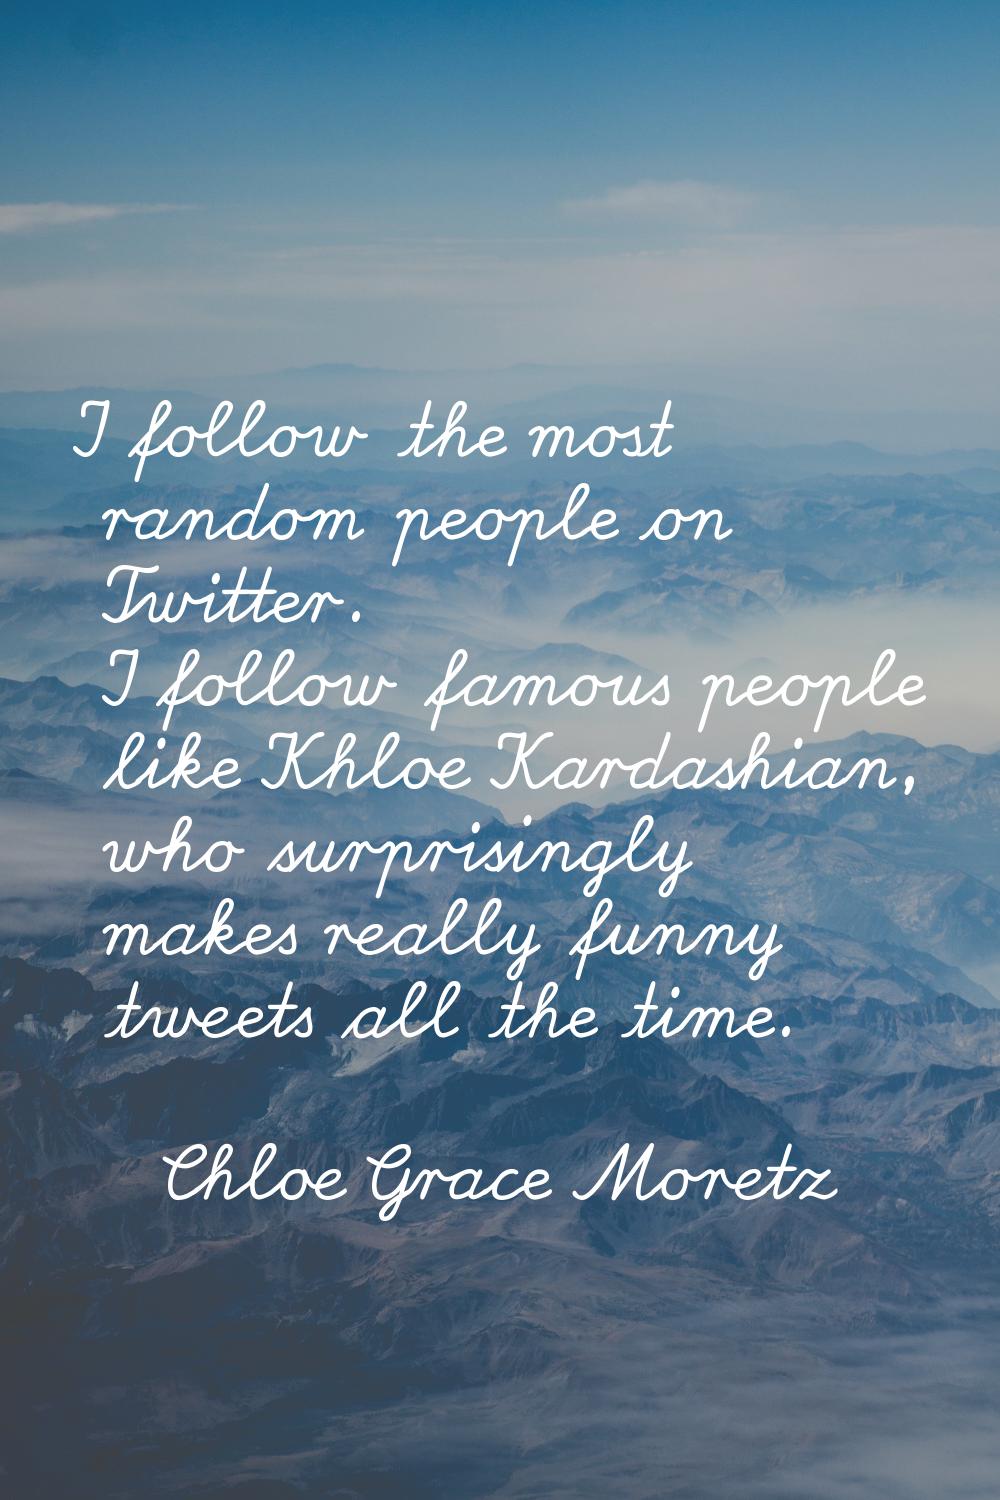 I follow the most random people on Twitter. I follow famous people like Khloe Kardashian, who surpr